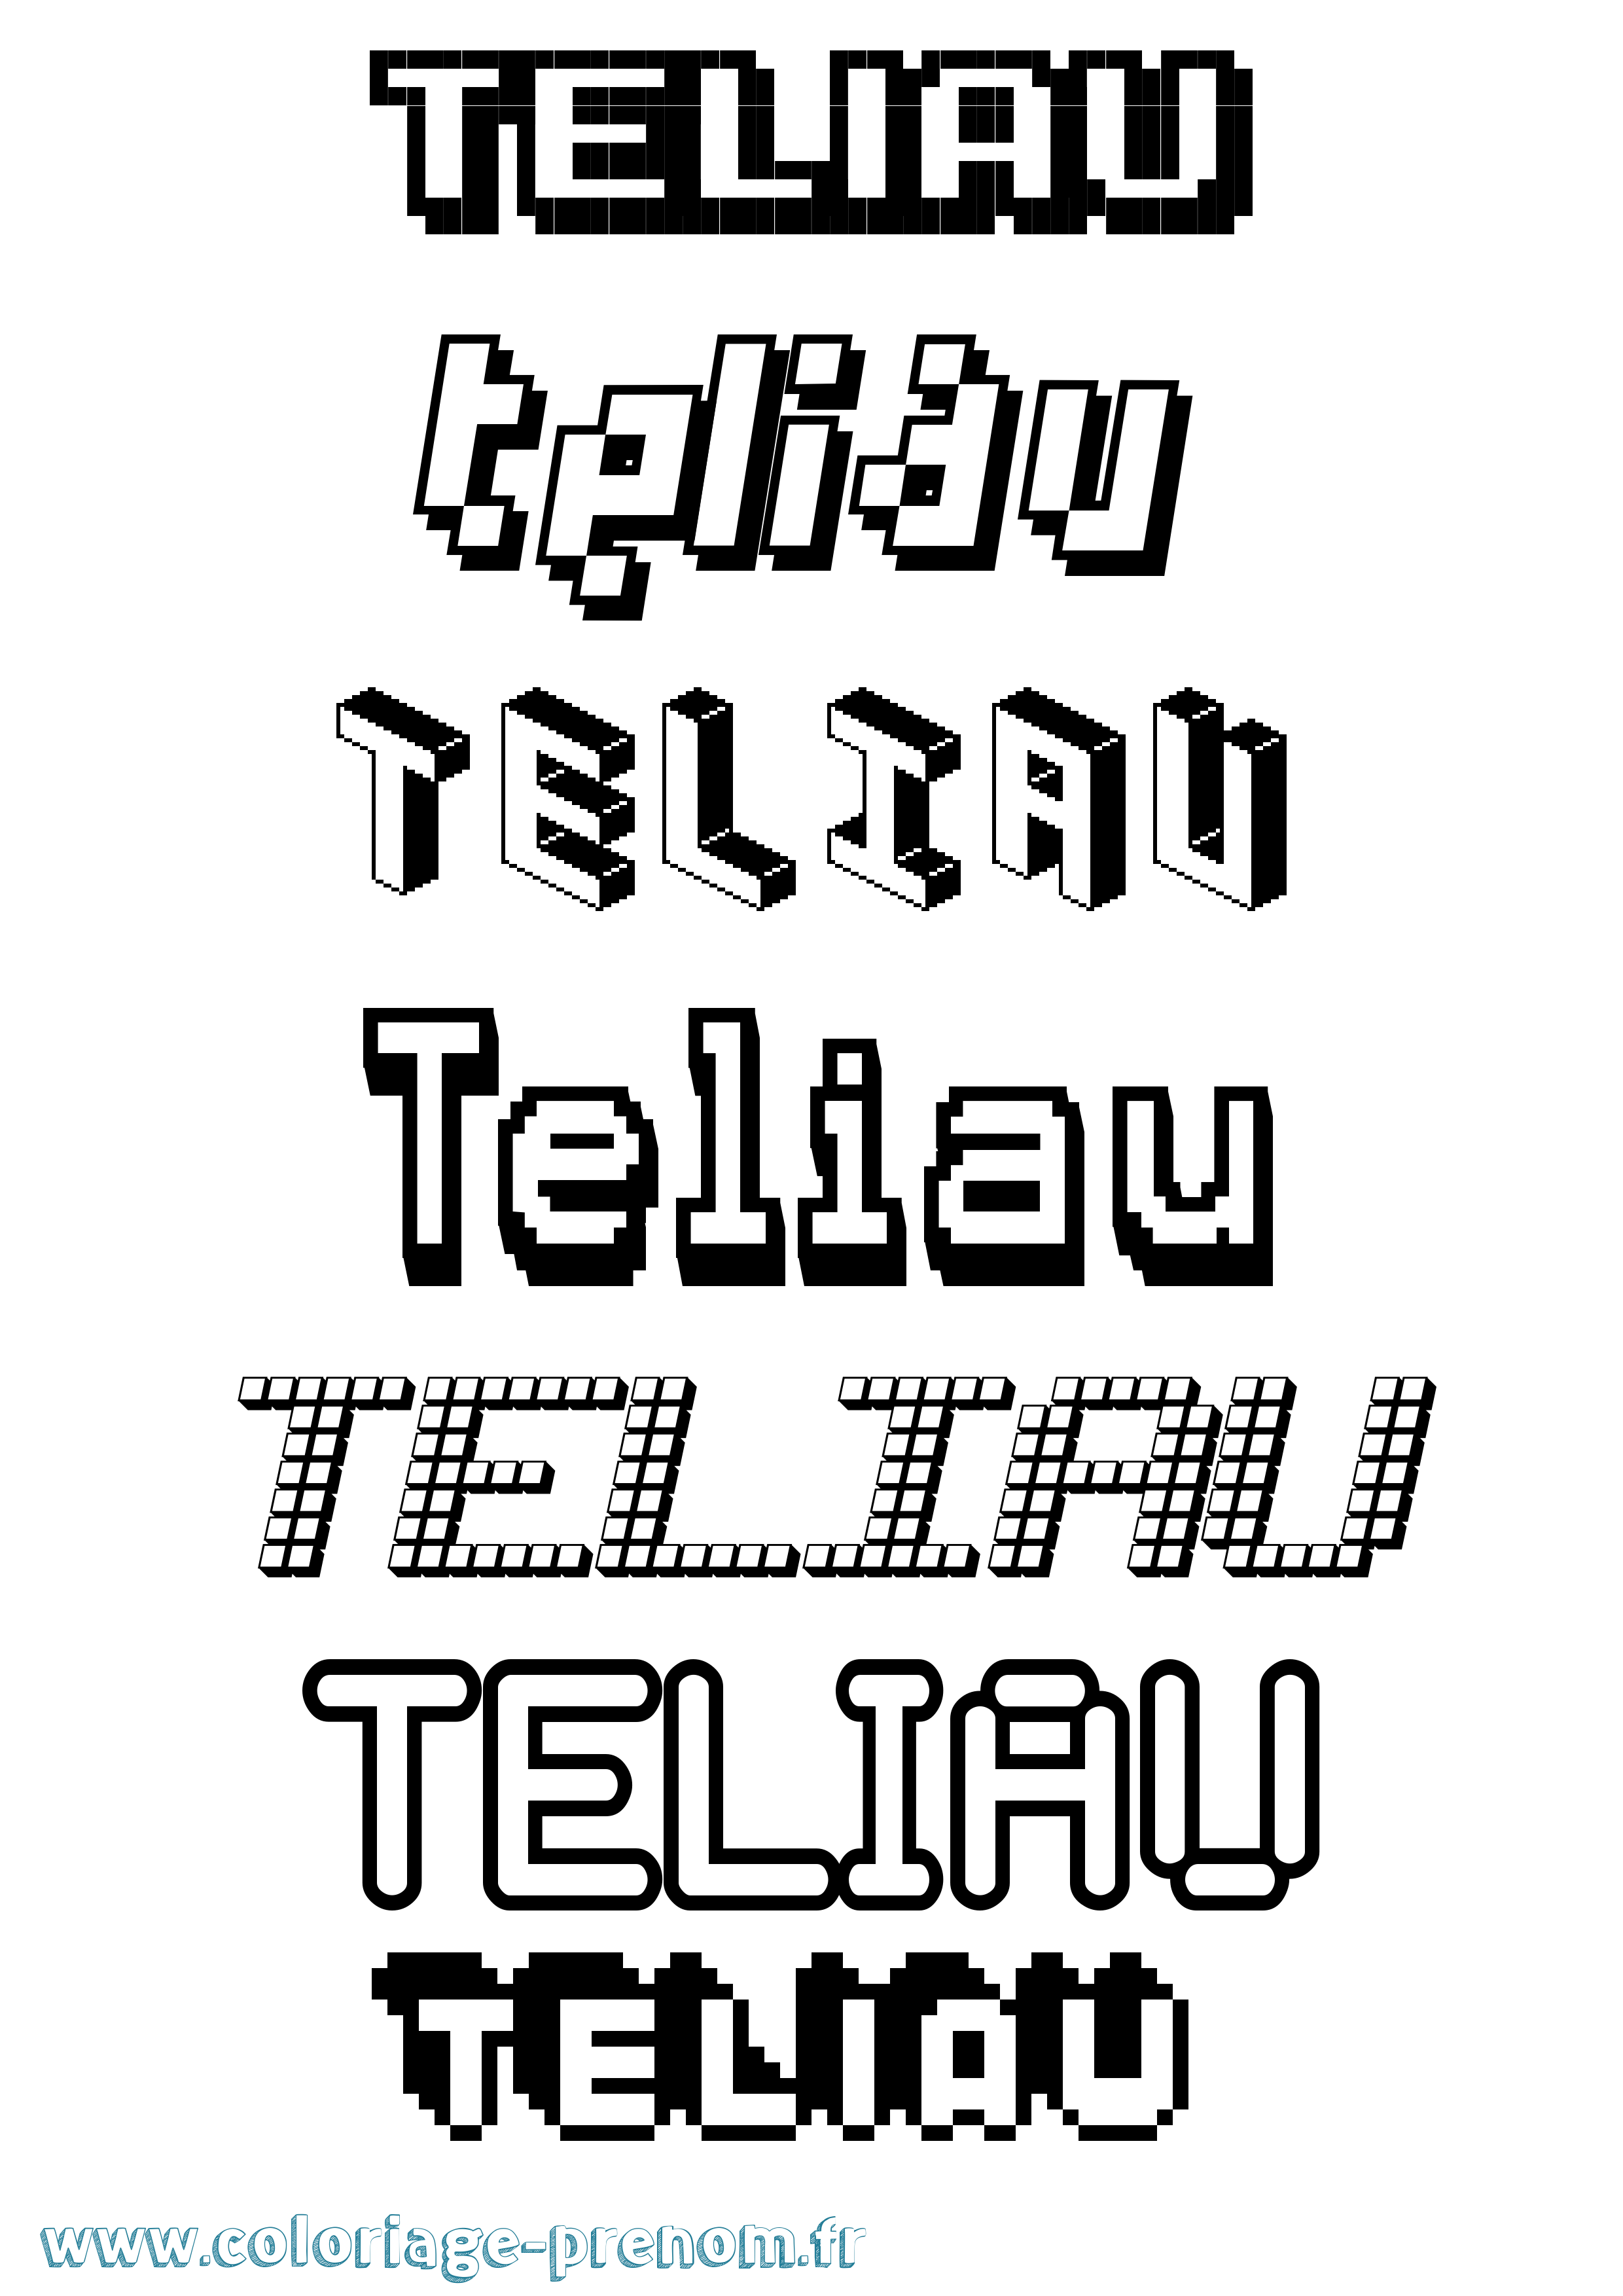 Coloriage prénom Teliau Pixel